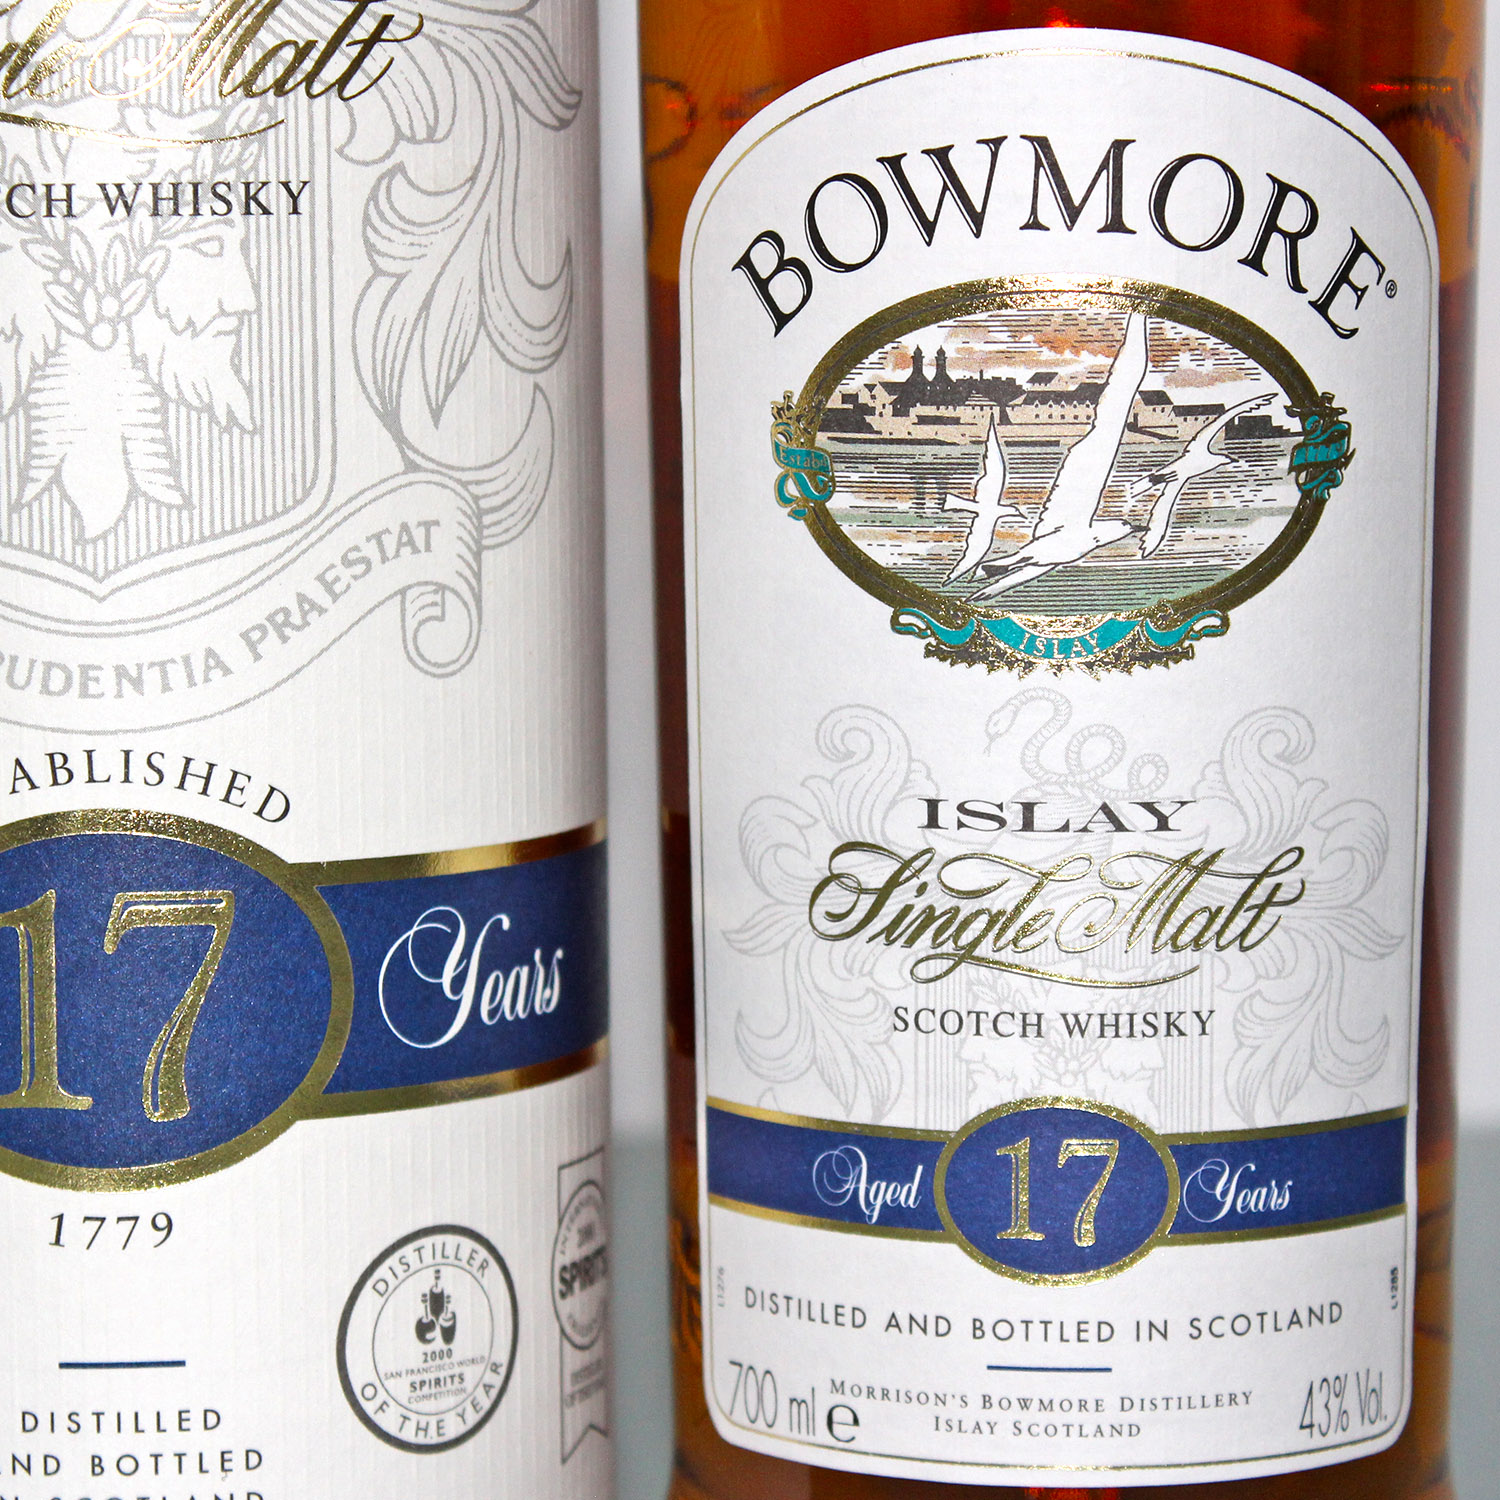 Bowmore 17 Years Single Malt Scotch Whisky Label